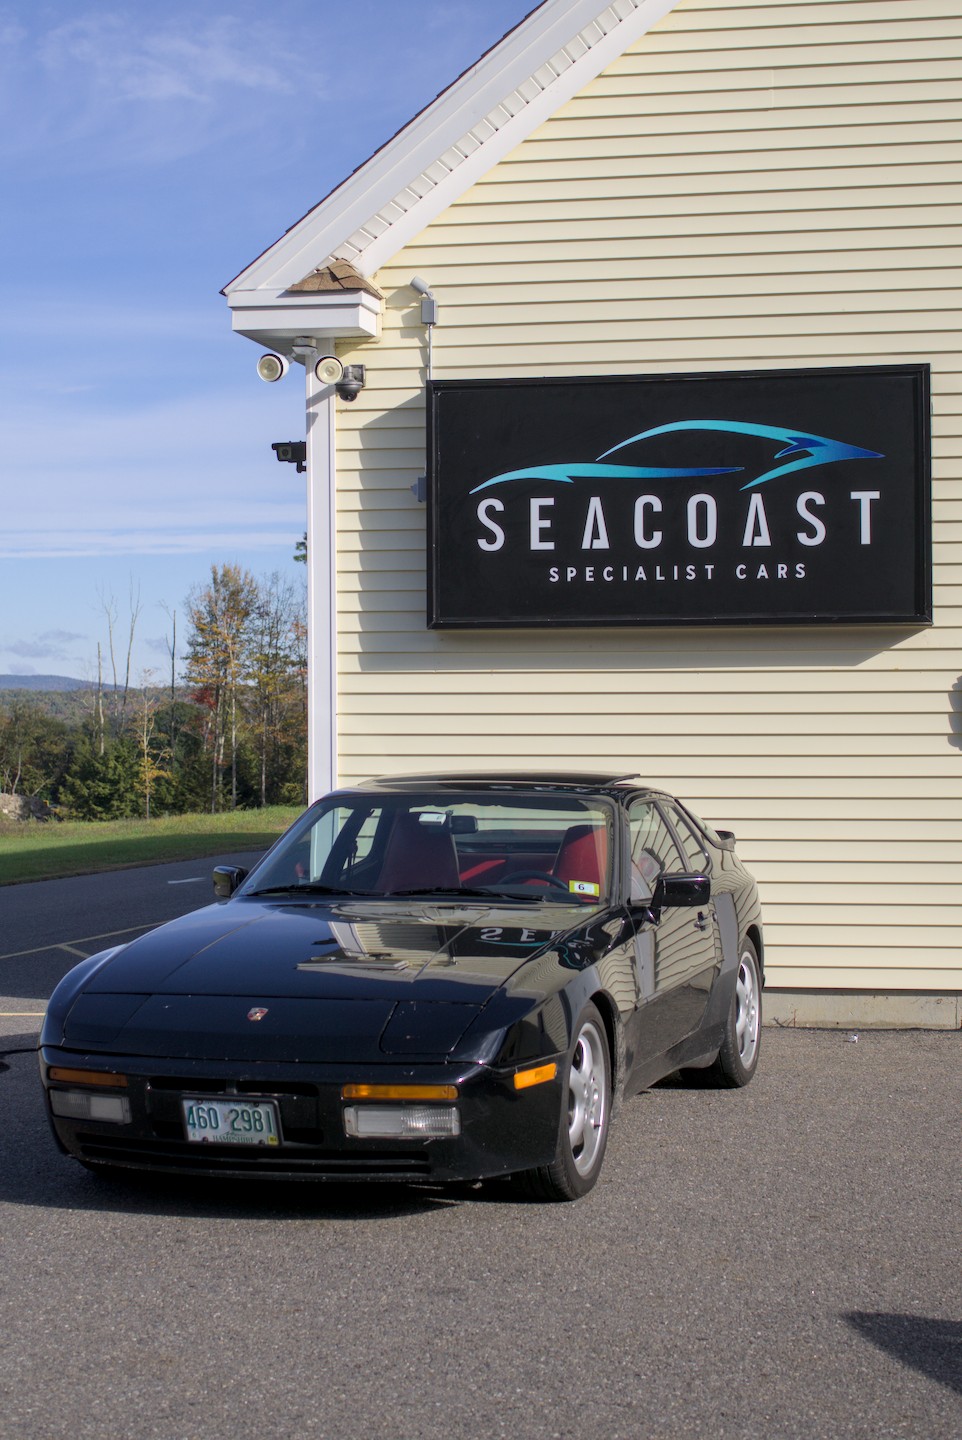 Seacoast Specialist Cars